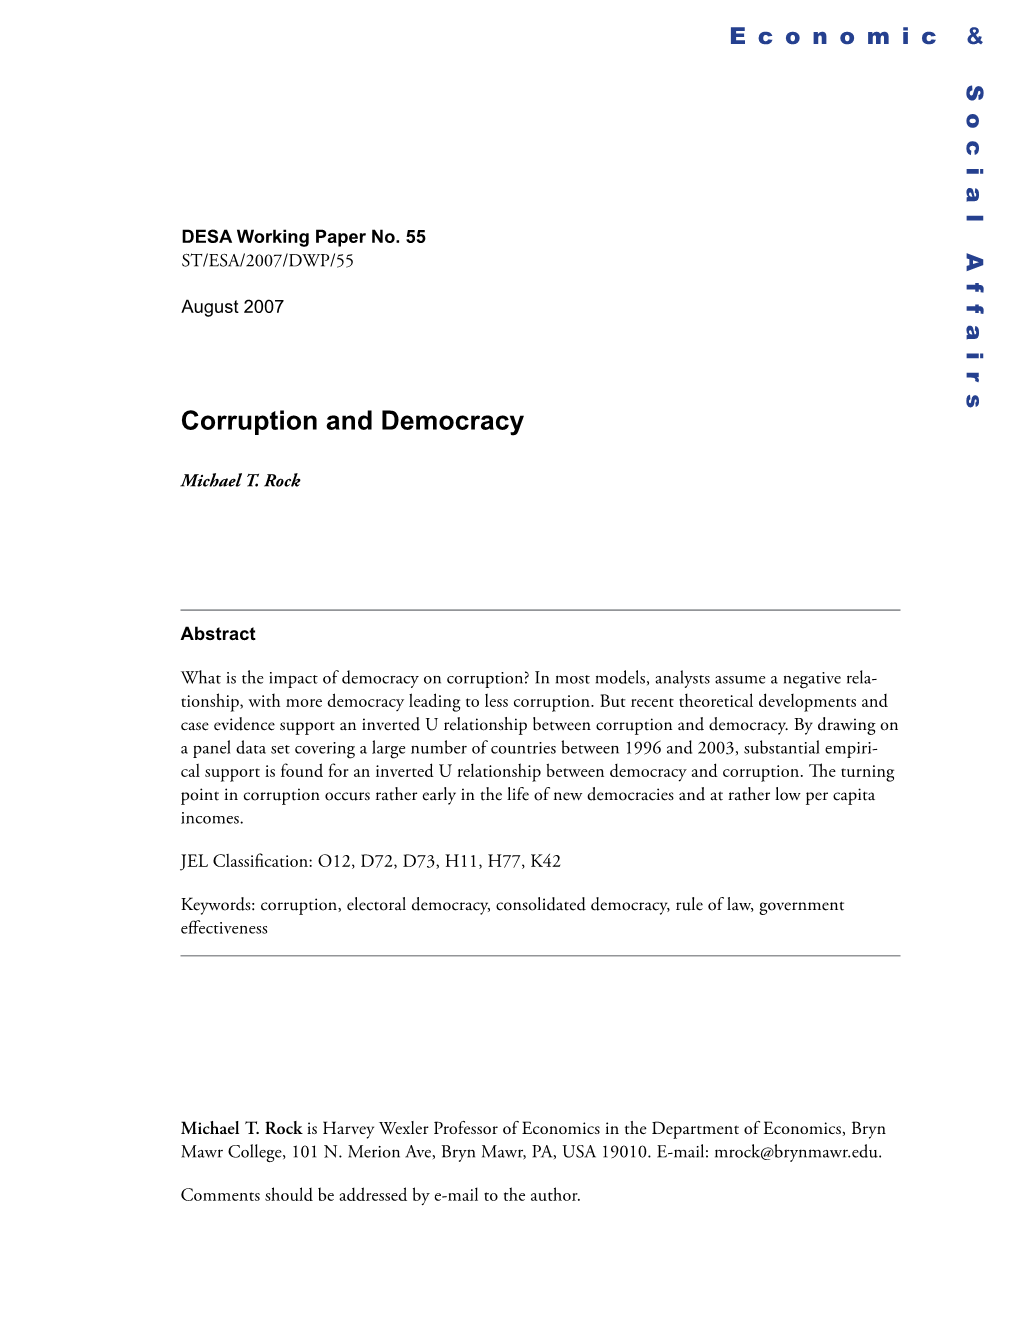 Corruption and Democracy